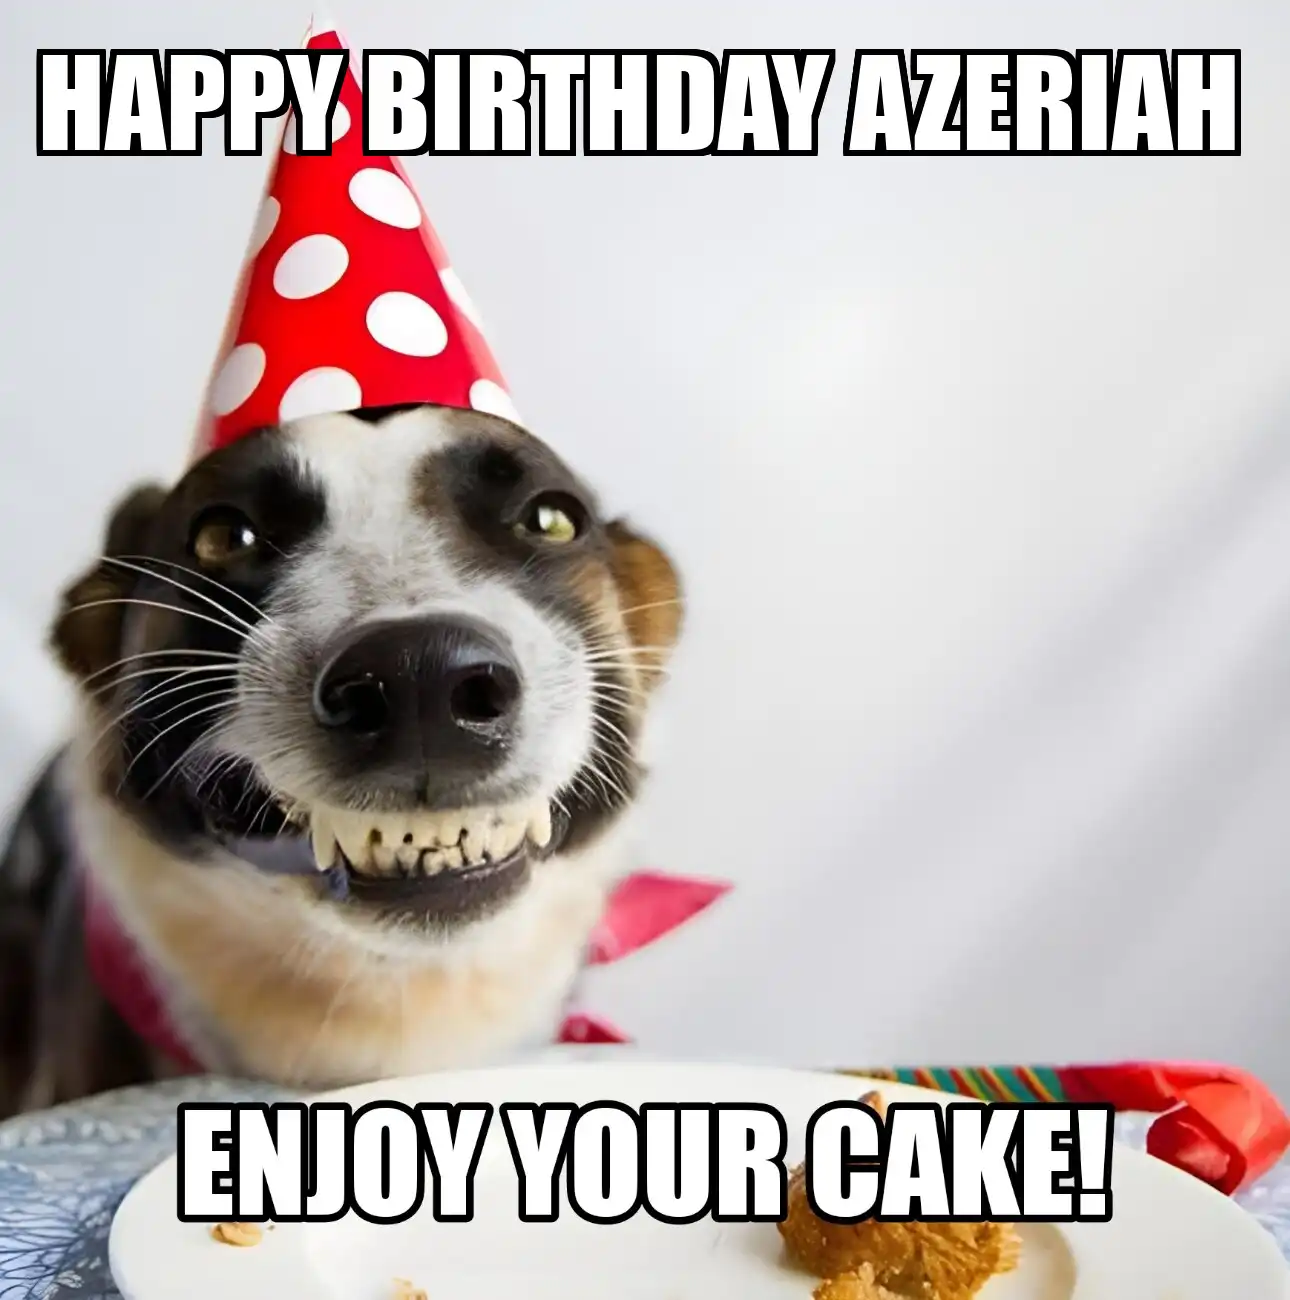 Happy Birthday Azeriah Enjoy Your Cake Dog Meme